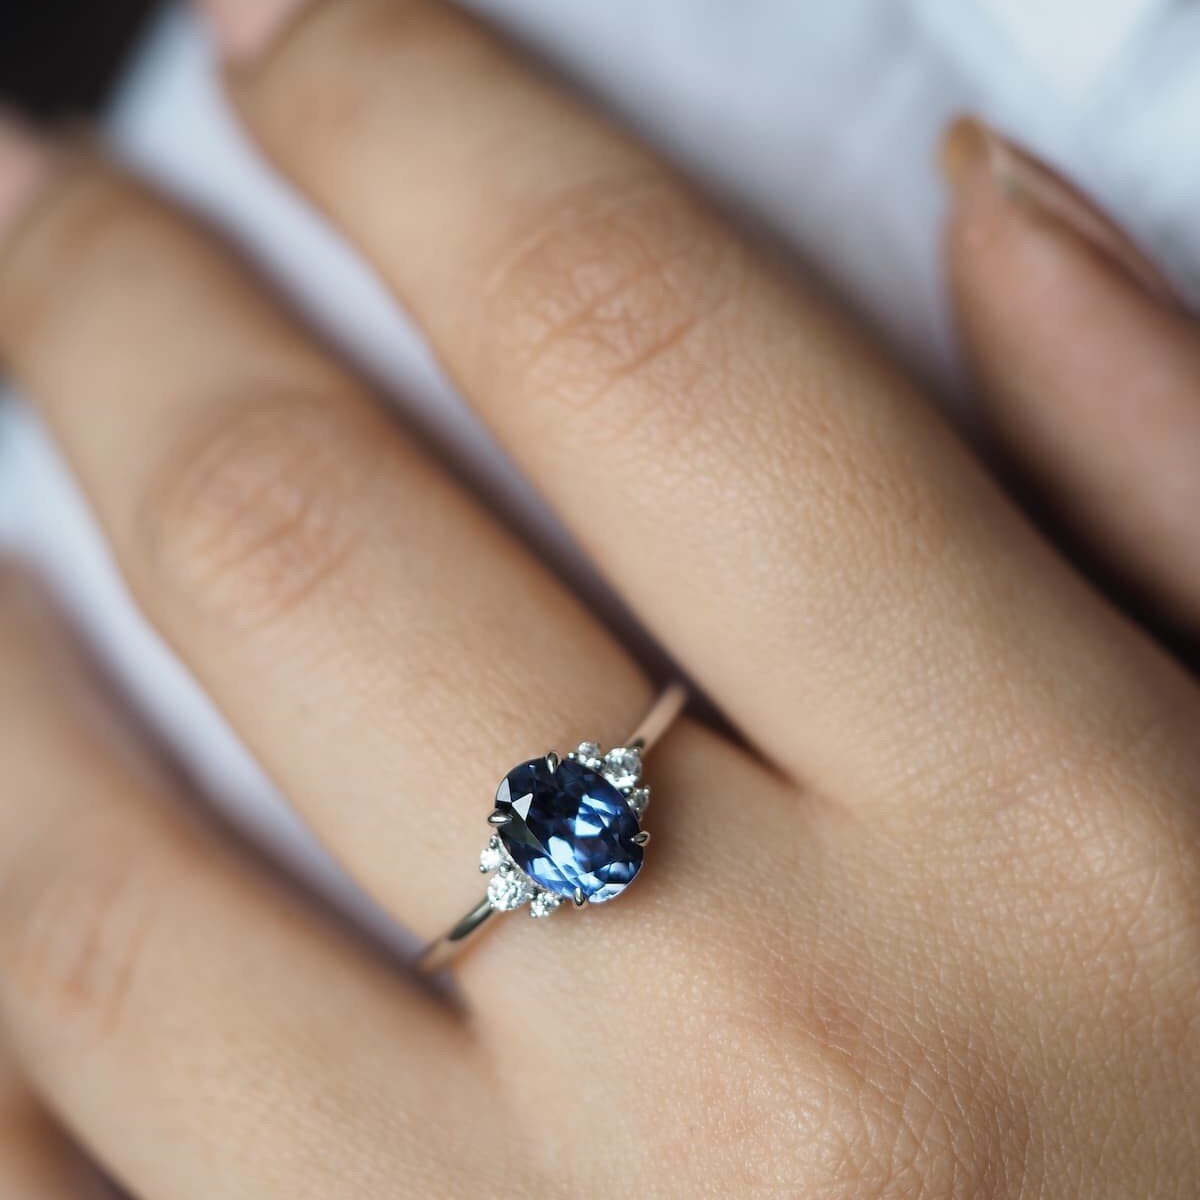 Sophia Blue Sapphire Engagement Ring shown in white gold